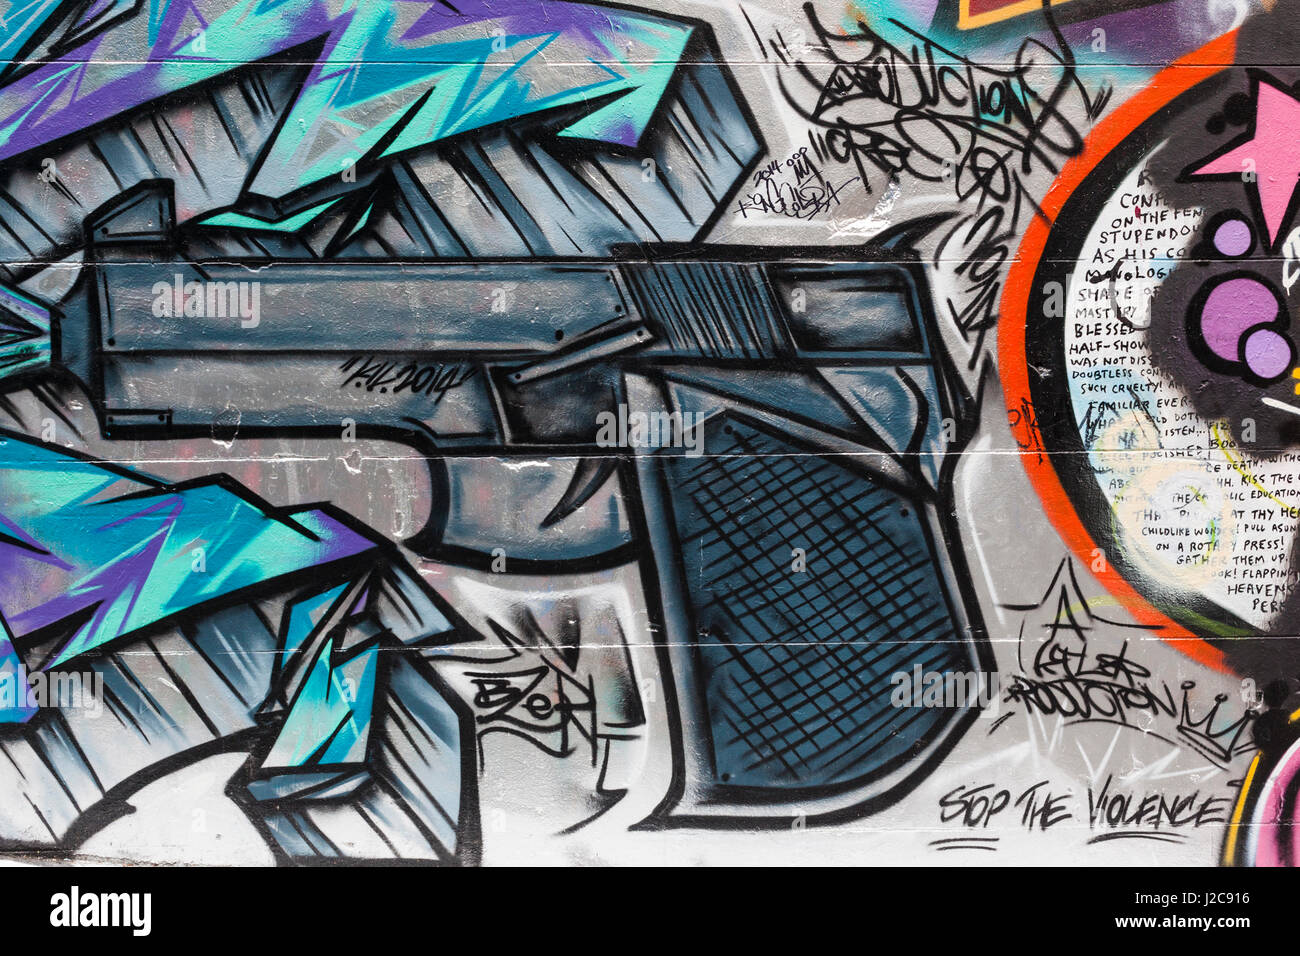 Australia, Victoria, Melbourne, Hosier Lane, streetside graffiti gallery (Editorial Use Only) Stock Photo